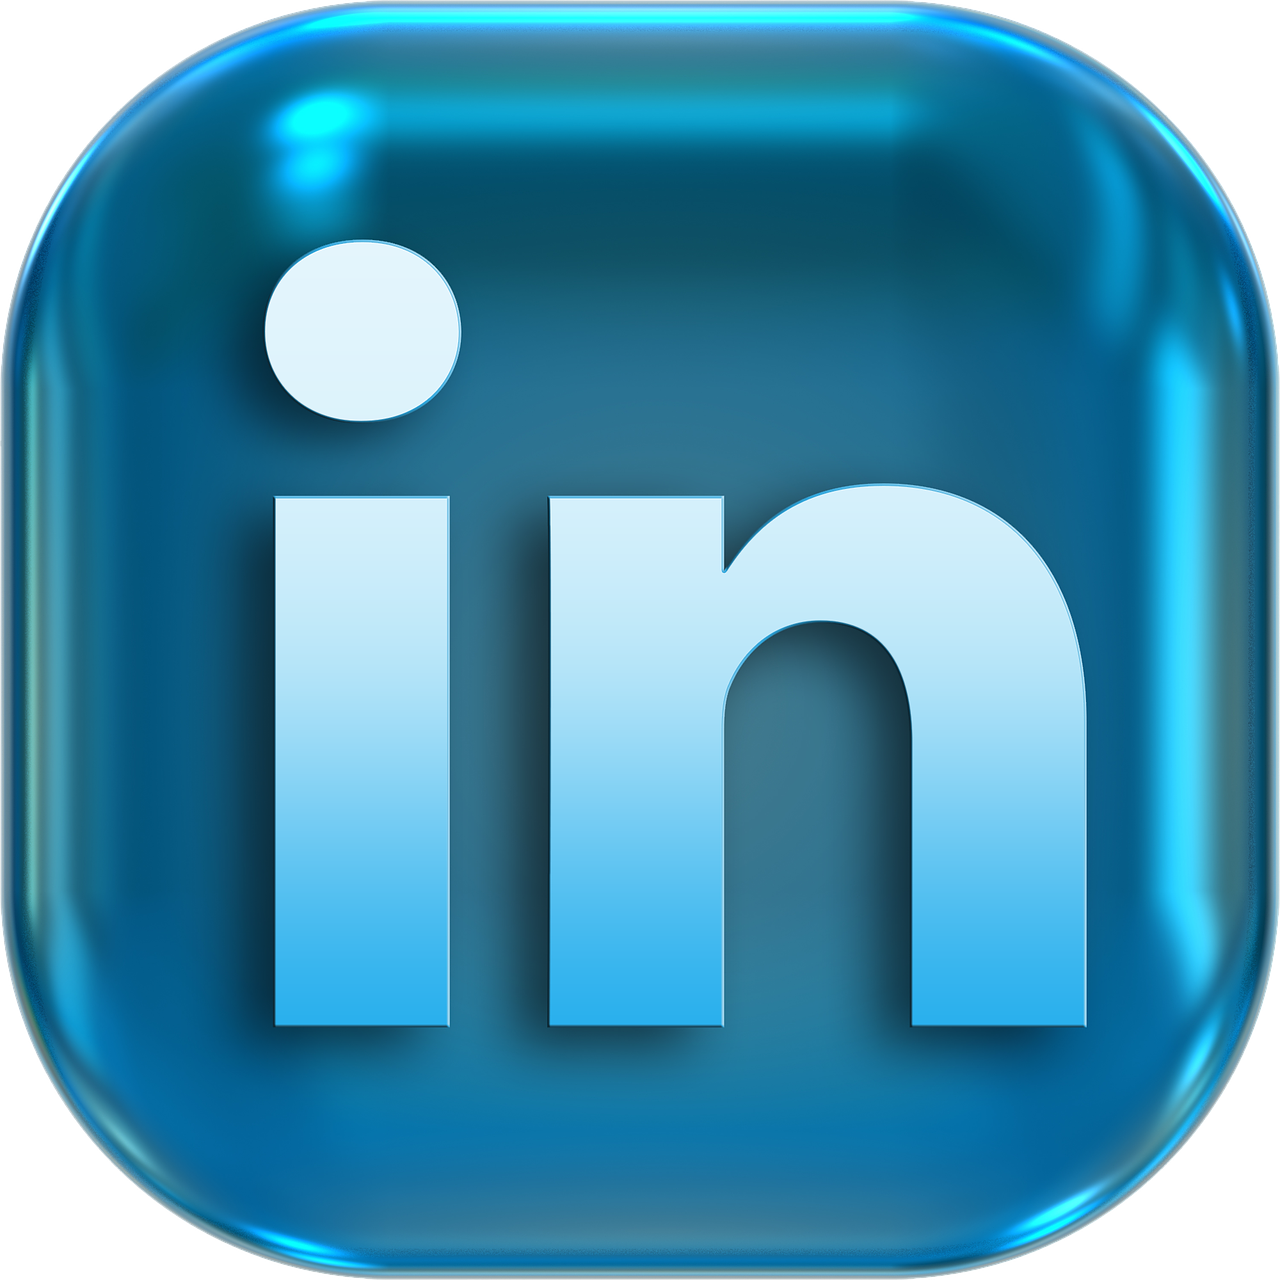 Icons Symbols Button Linkedin Png Image